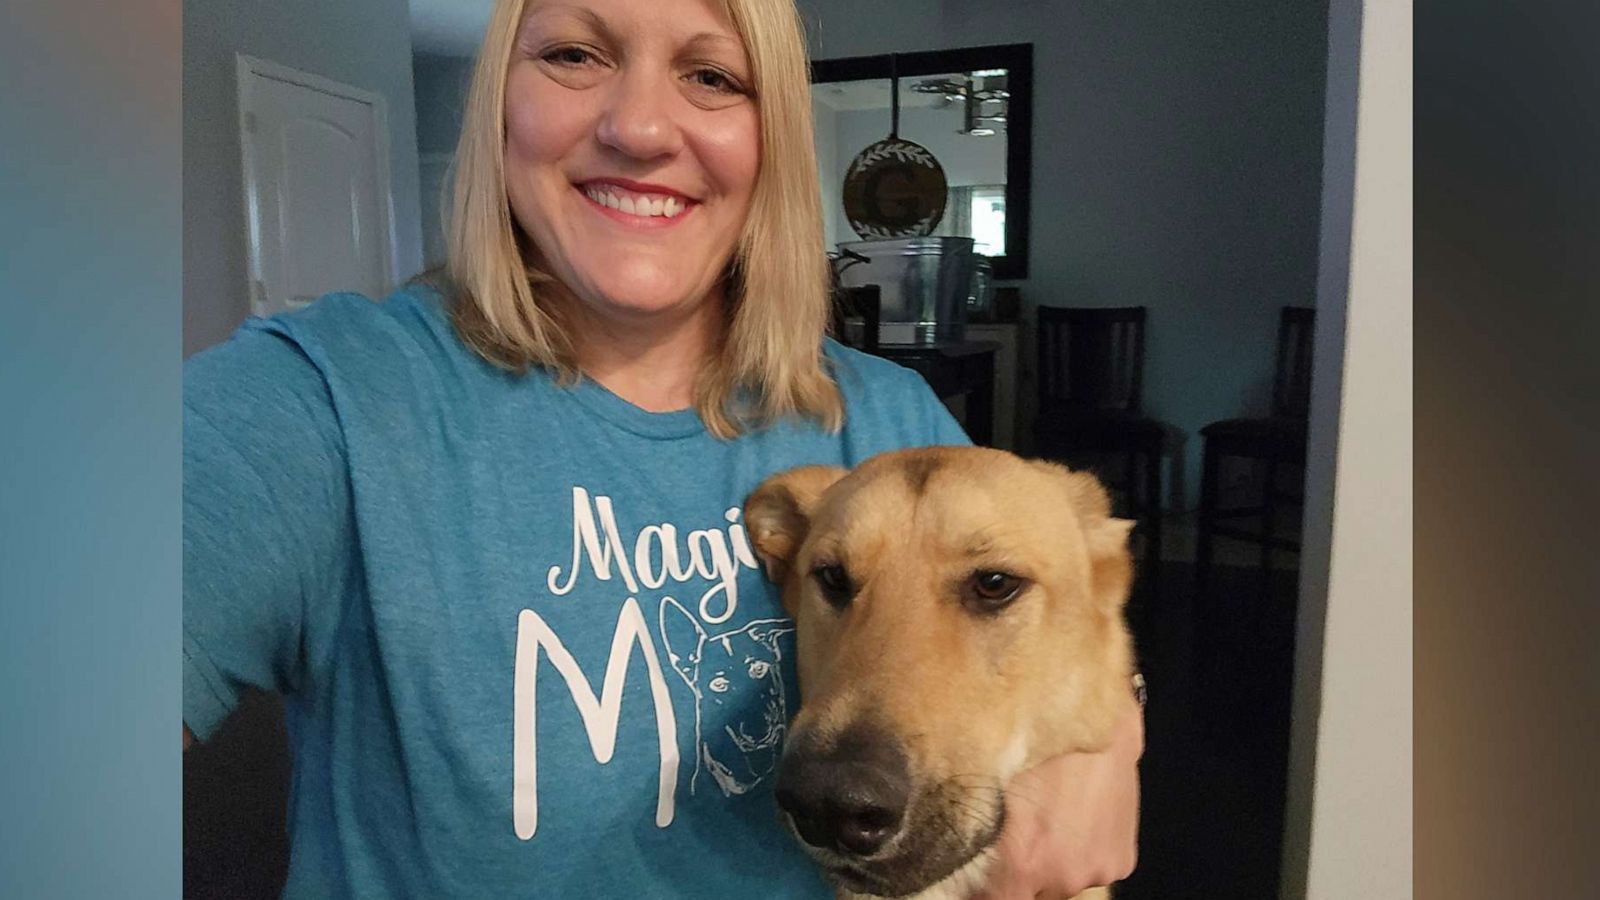 Pets First Louisville Signature Pro Collar for Dogs, Medium